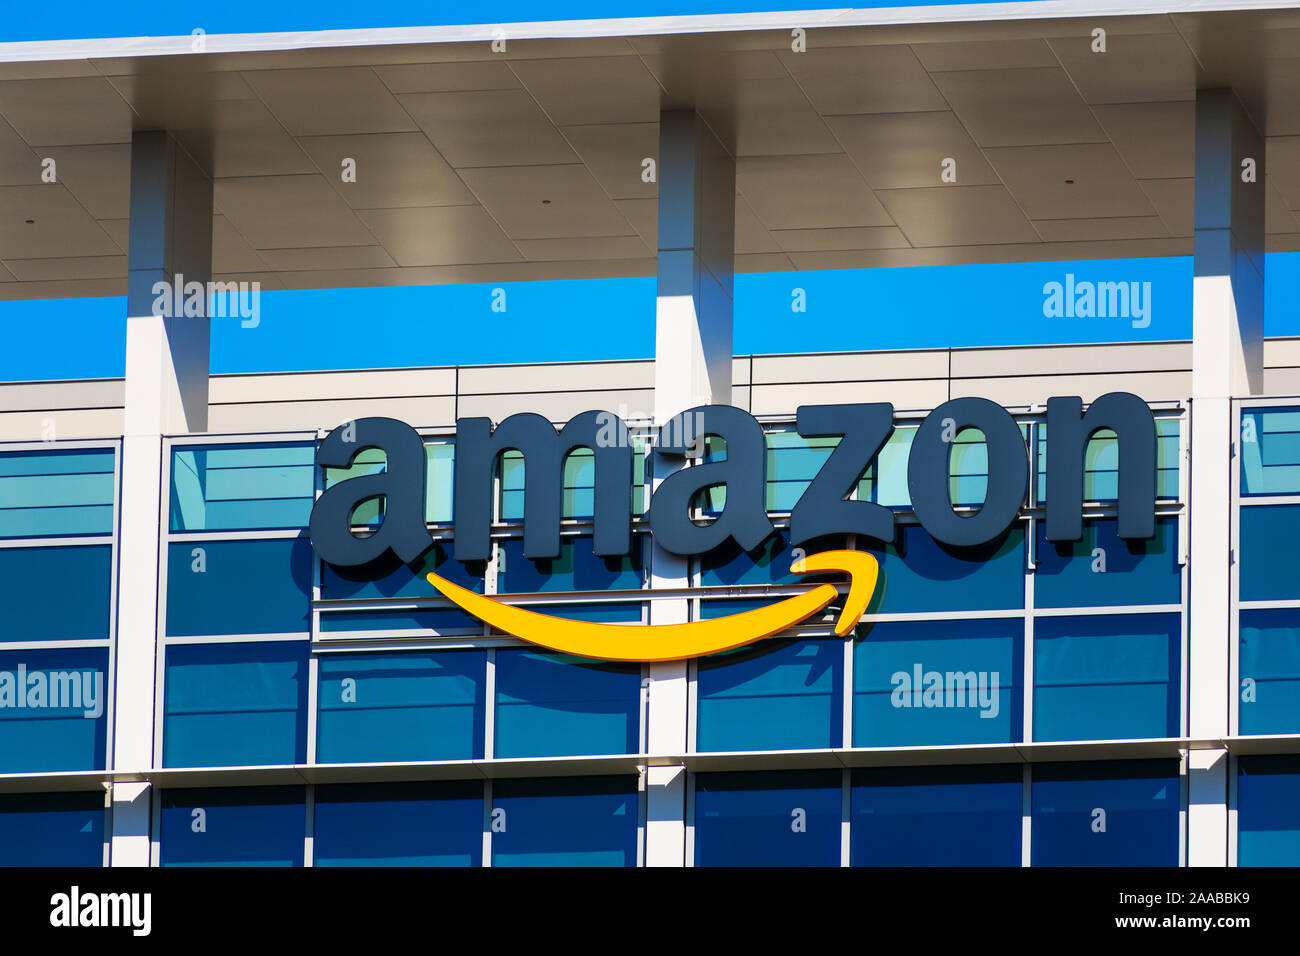 Amazon logo with its signature orange smile on facade of modern company campus - Palo Alto, California, USA - 2019 Stock Photo